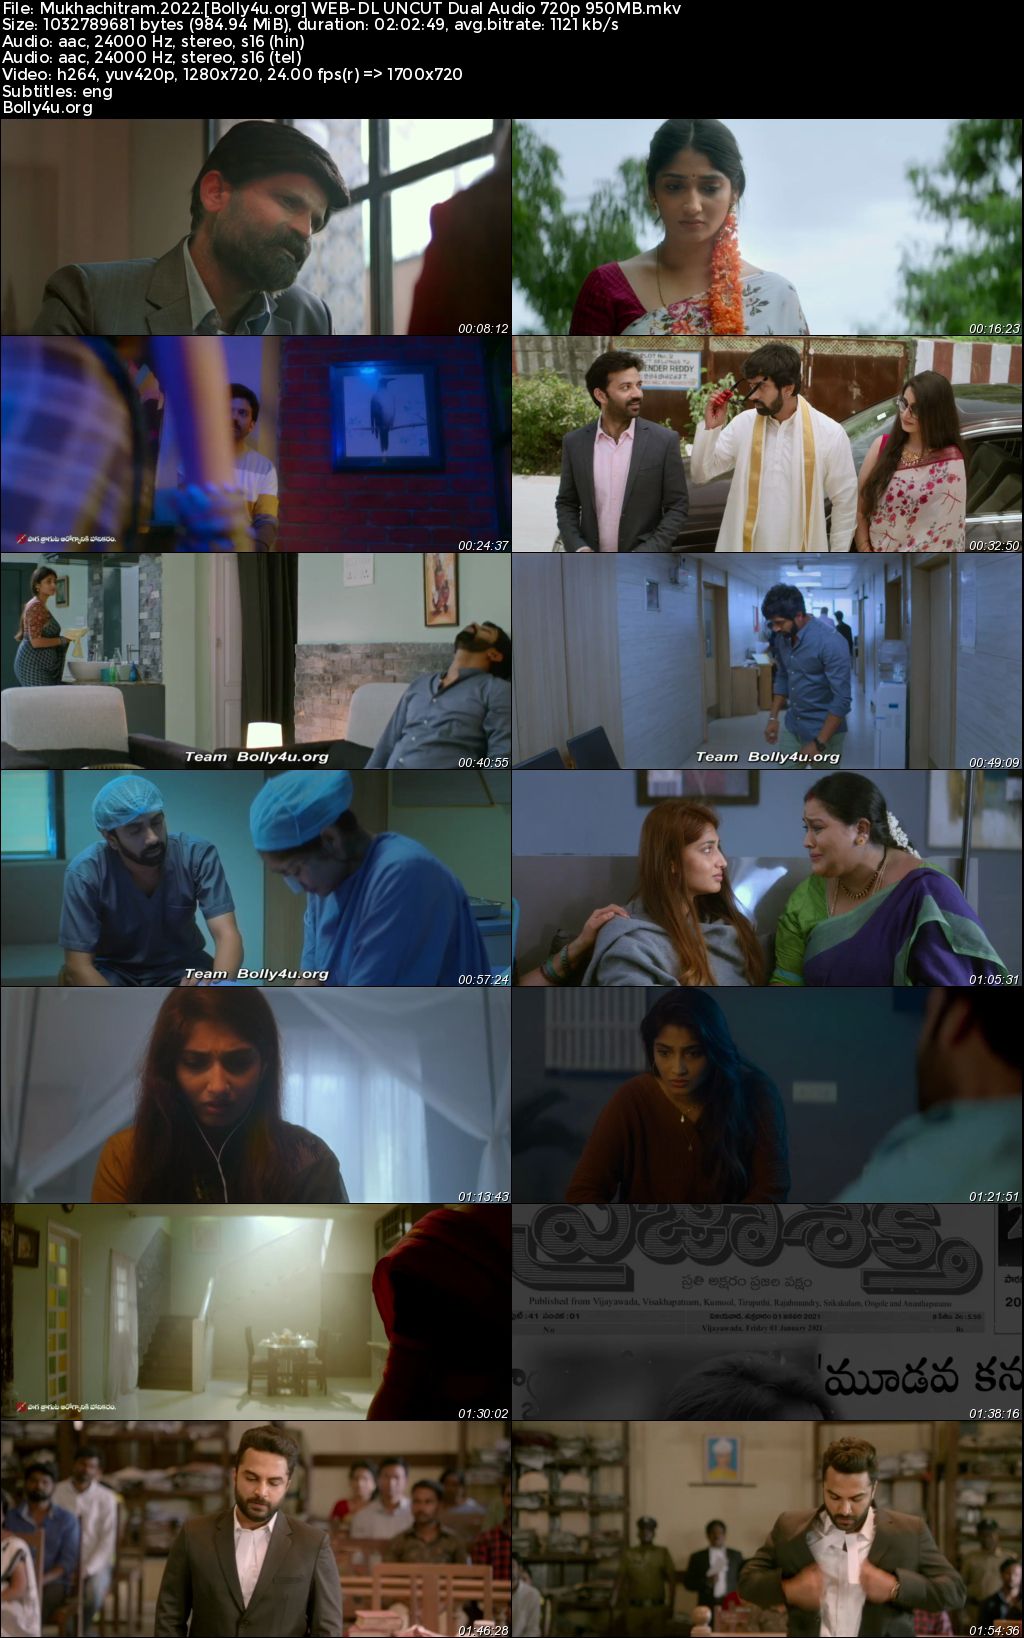 Mukhachitram 2022 WEB-DL UNCUT Hindi Dual Audio ORG Full Movie Download 1080p 720p 480p